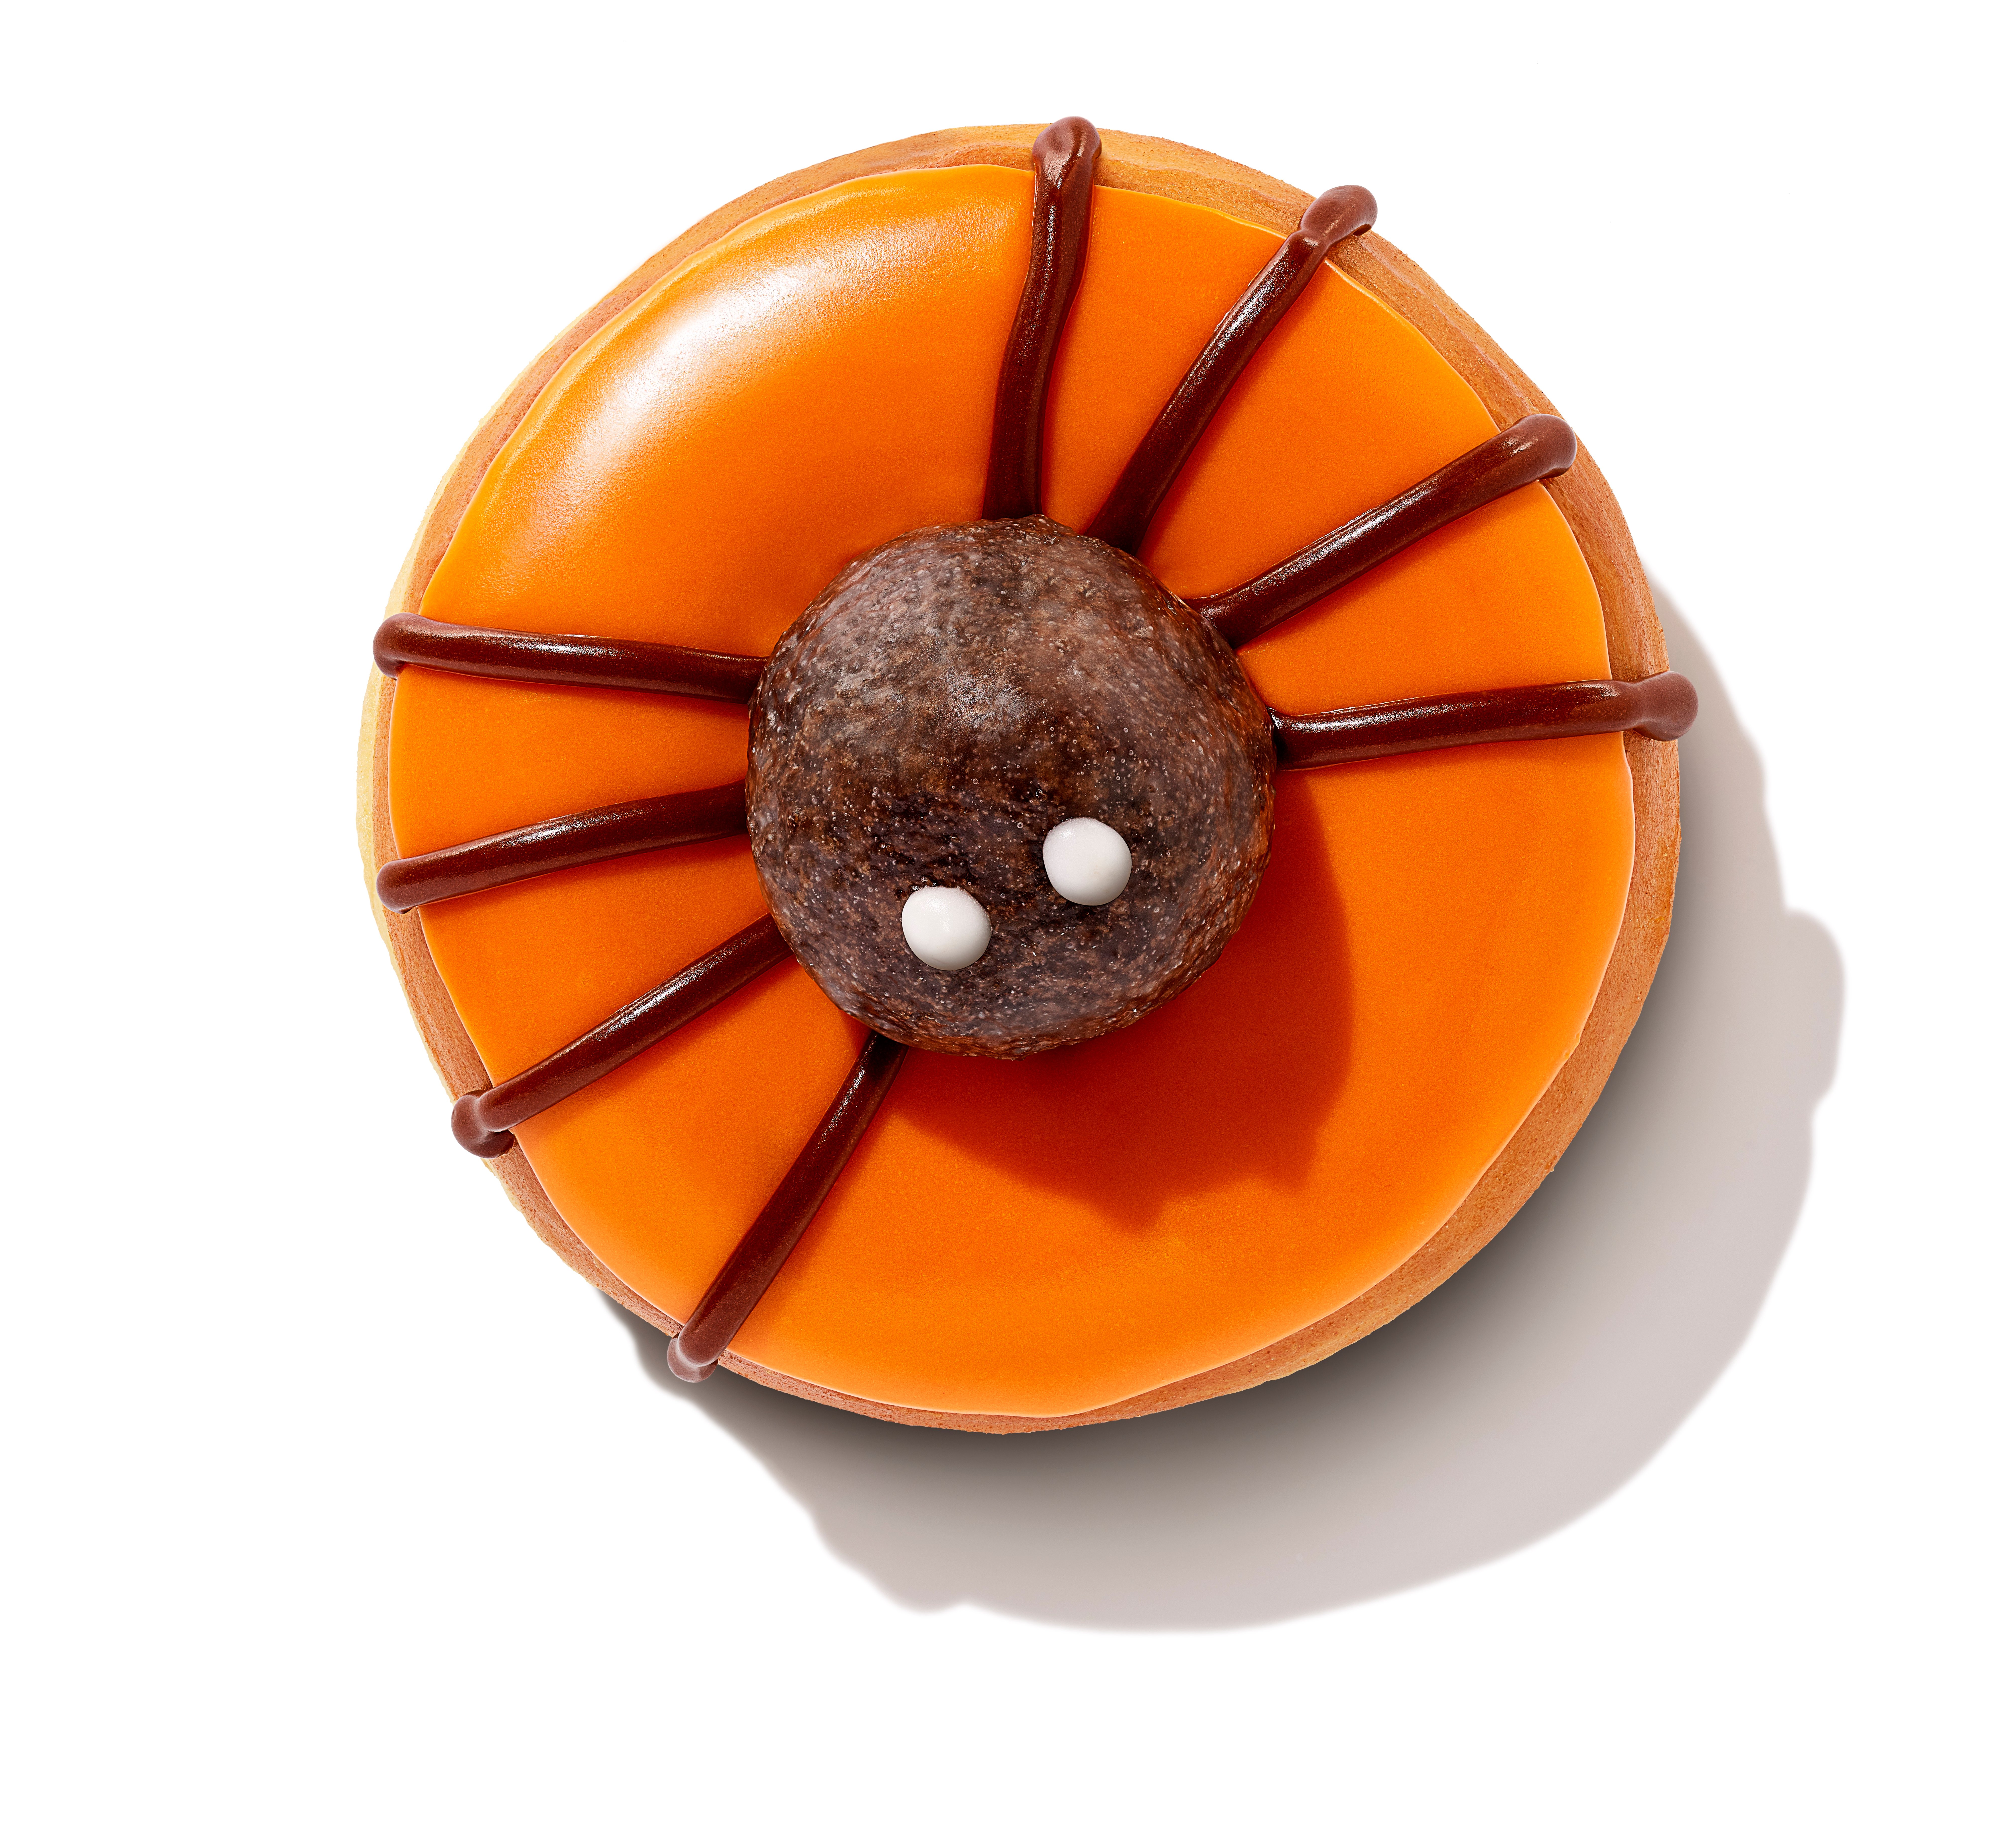 Dunkin's Halloween-themed spider doughnut